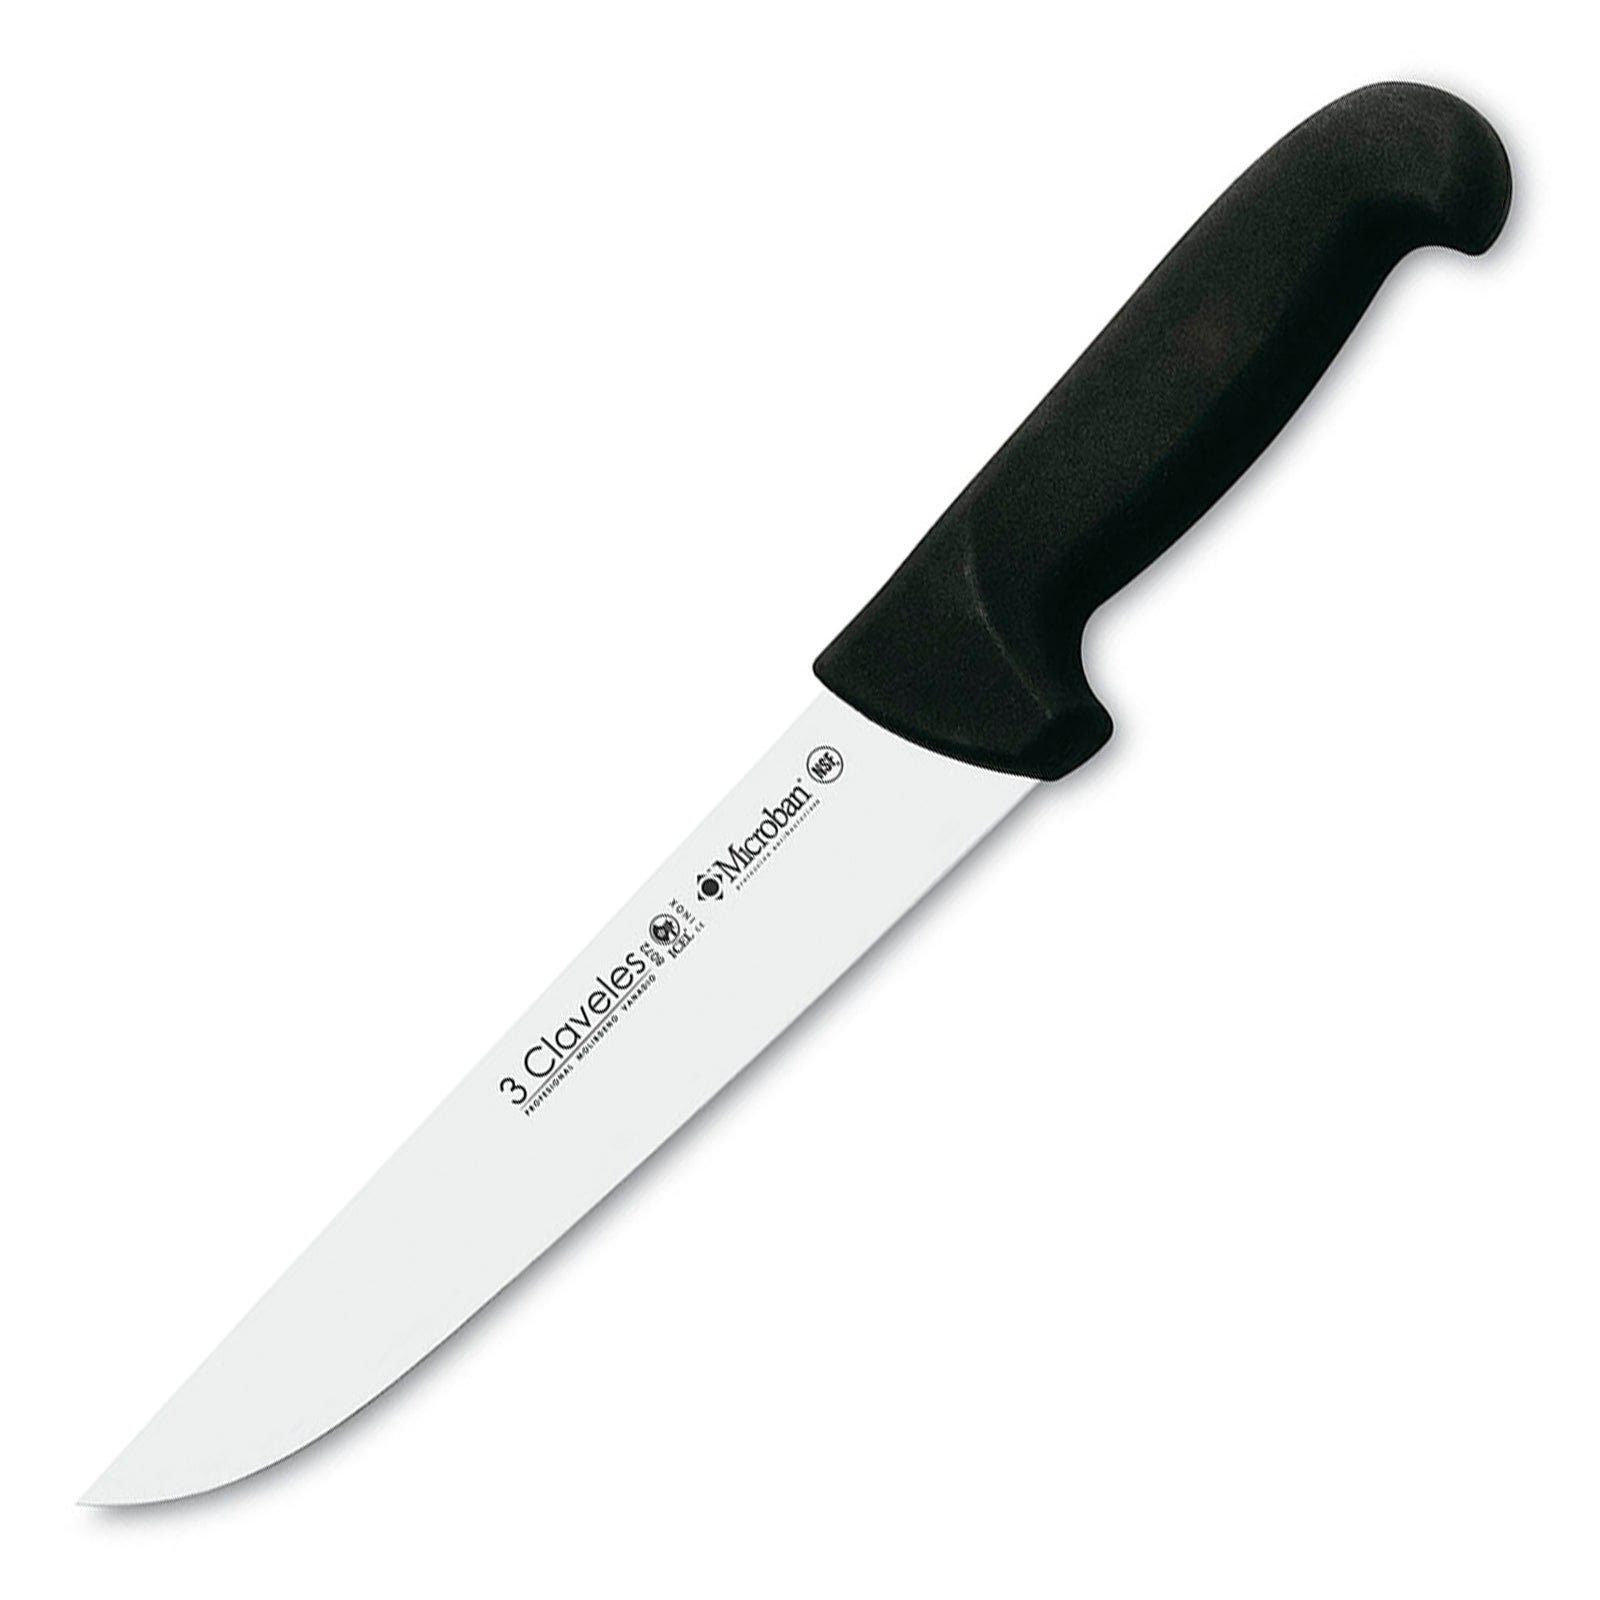 Cuchillo de Cocina 3 CLAVELES (Amarillo - Acero inoxidable - 24 cm - 9.5)